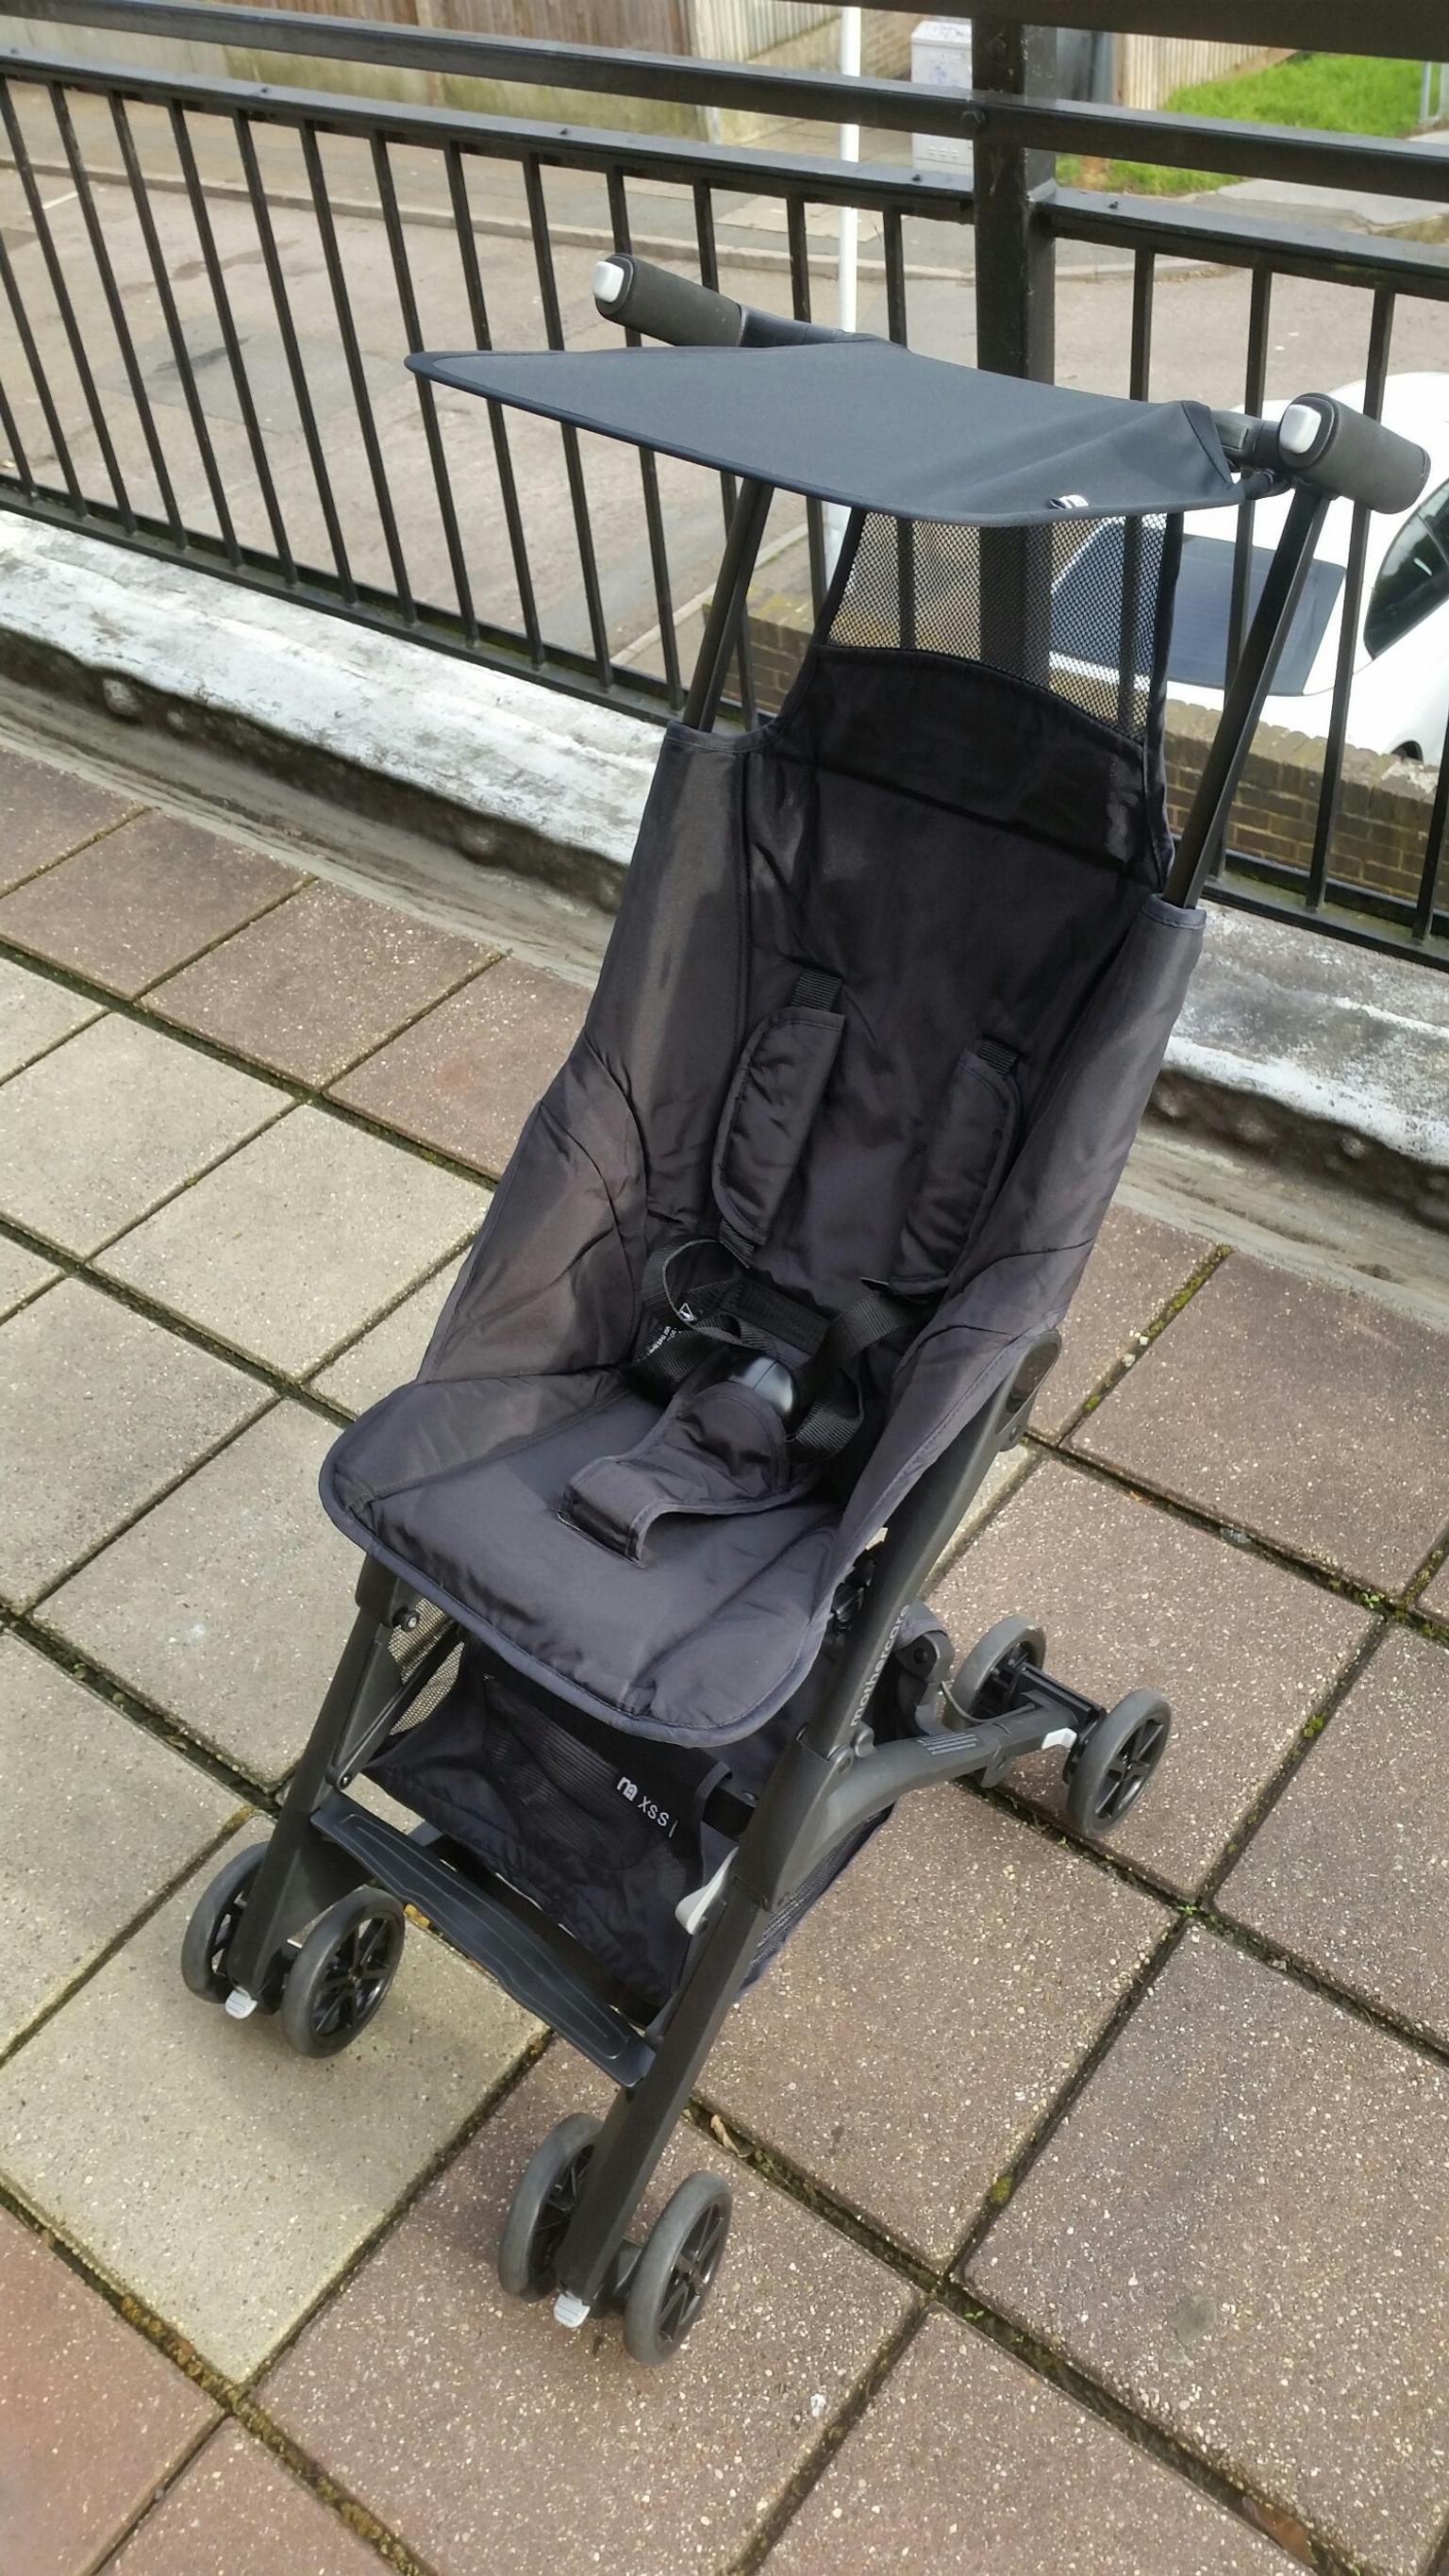 second hand gb pockit stroller